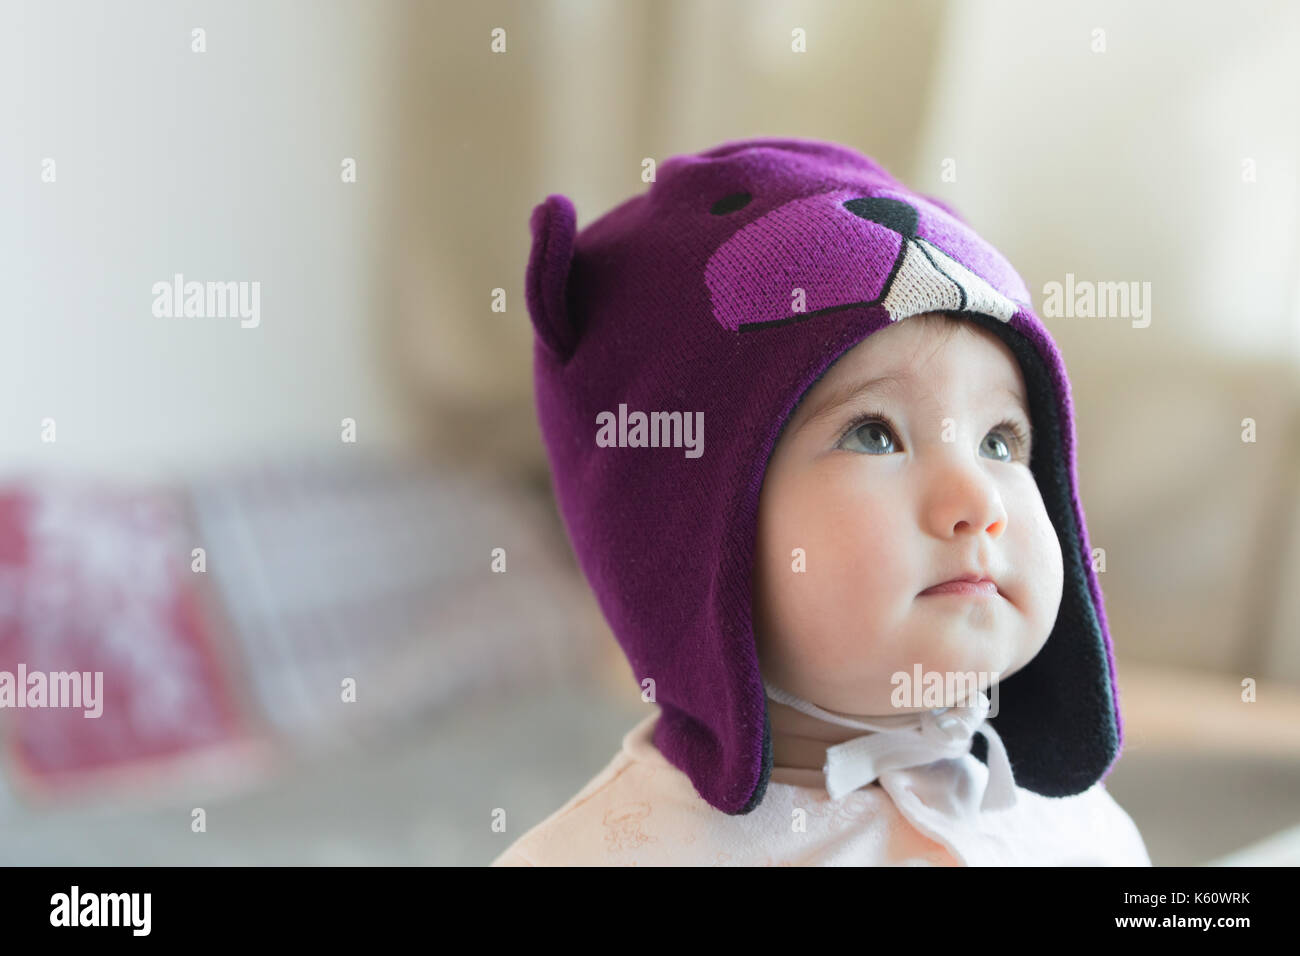 Little child in a beaver cap close up portrait. Stock Photo